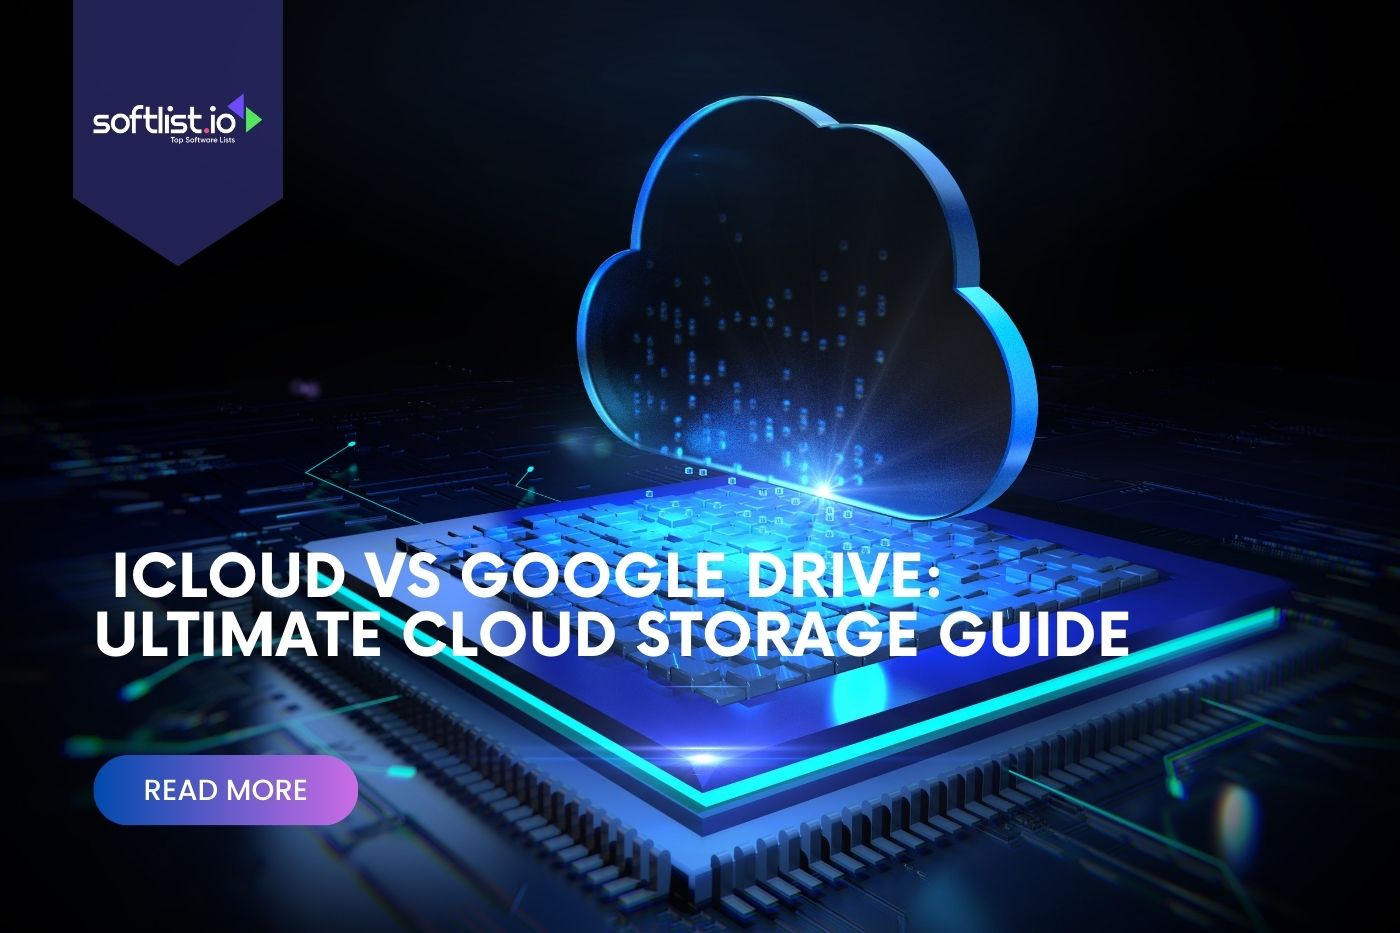 iCloud vs Google Drive Ultimate Cloud Storage Guide